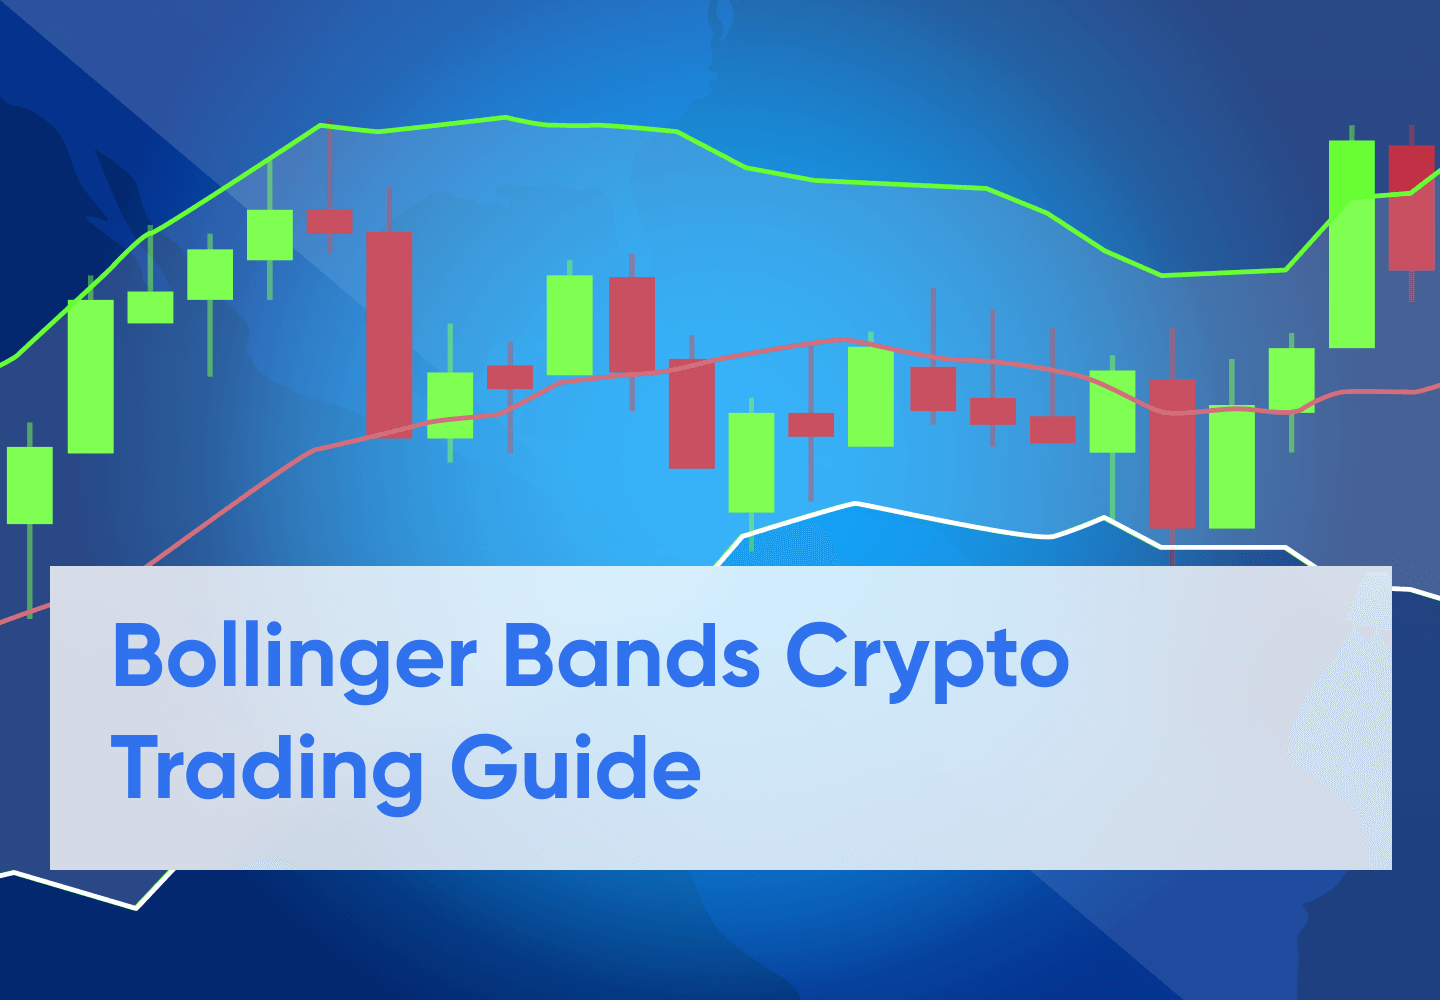 Bollinger Bands Crypto Trading Explained